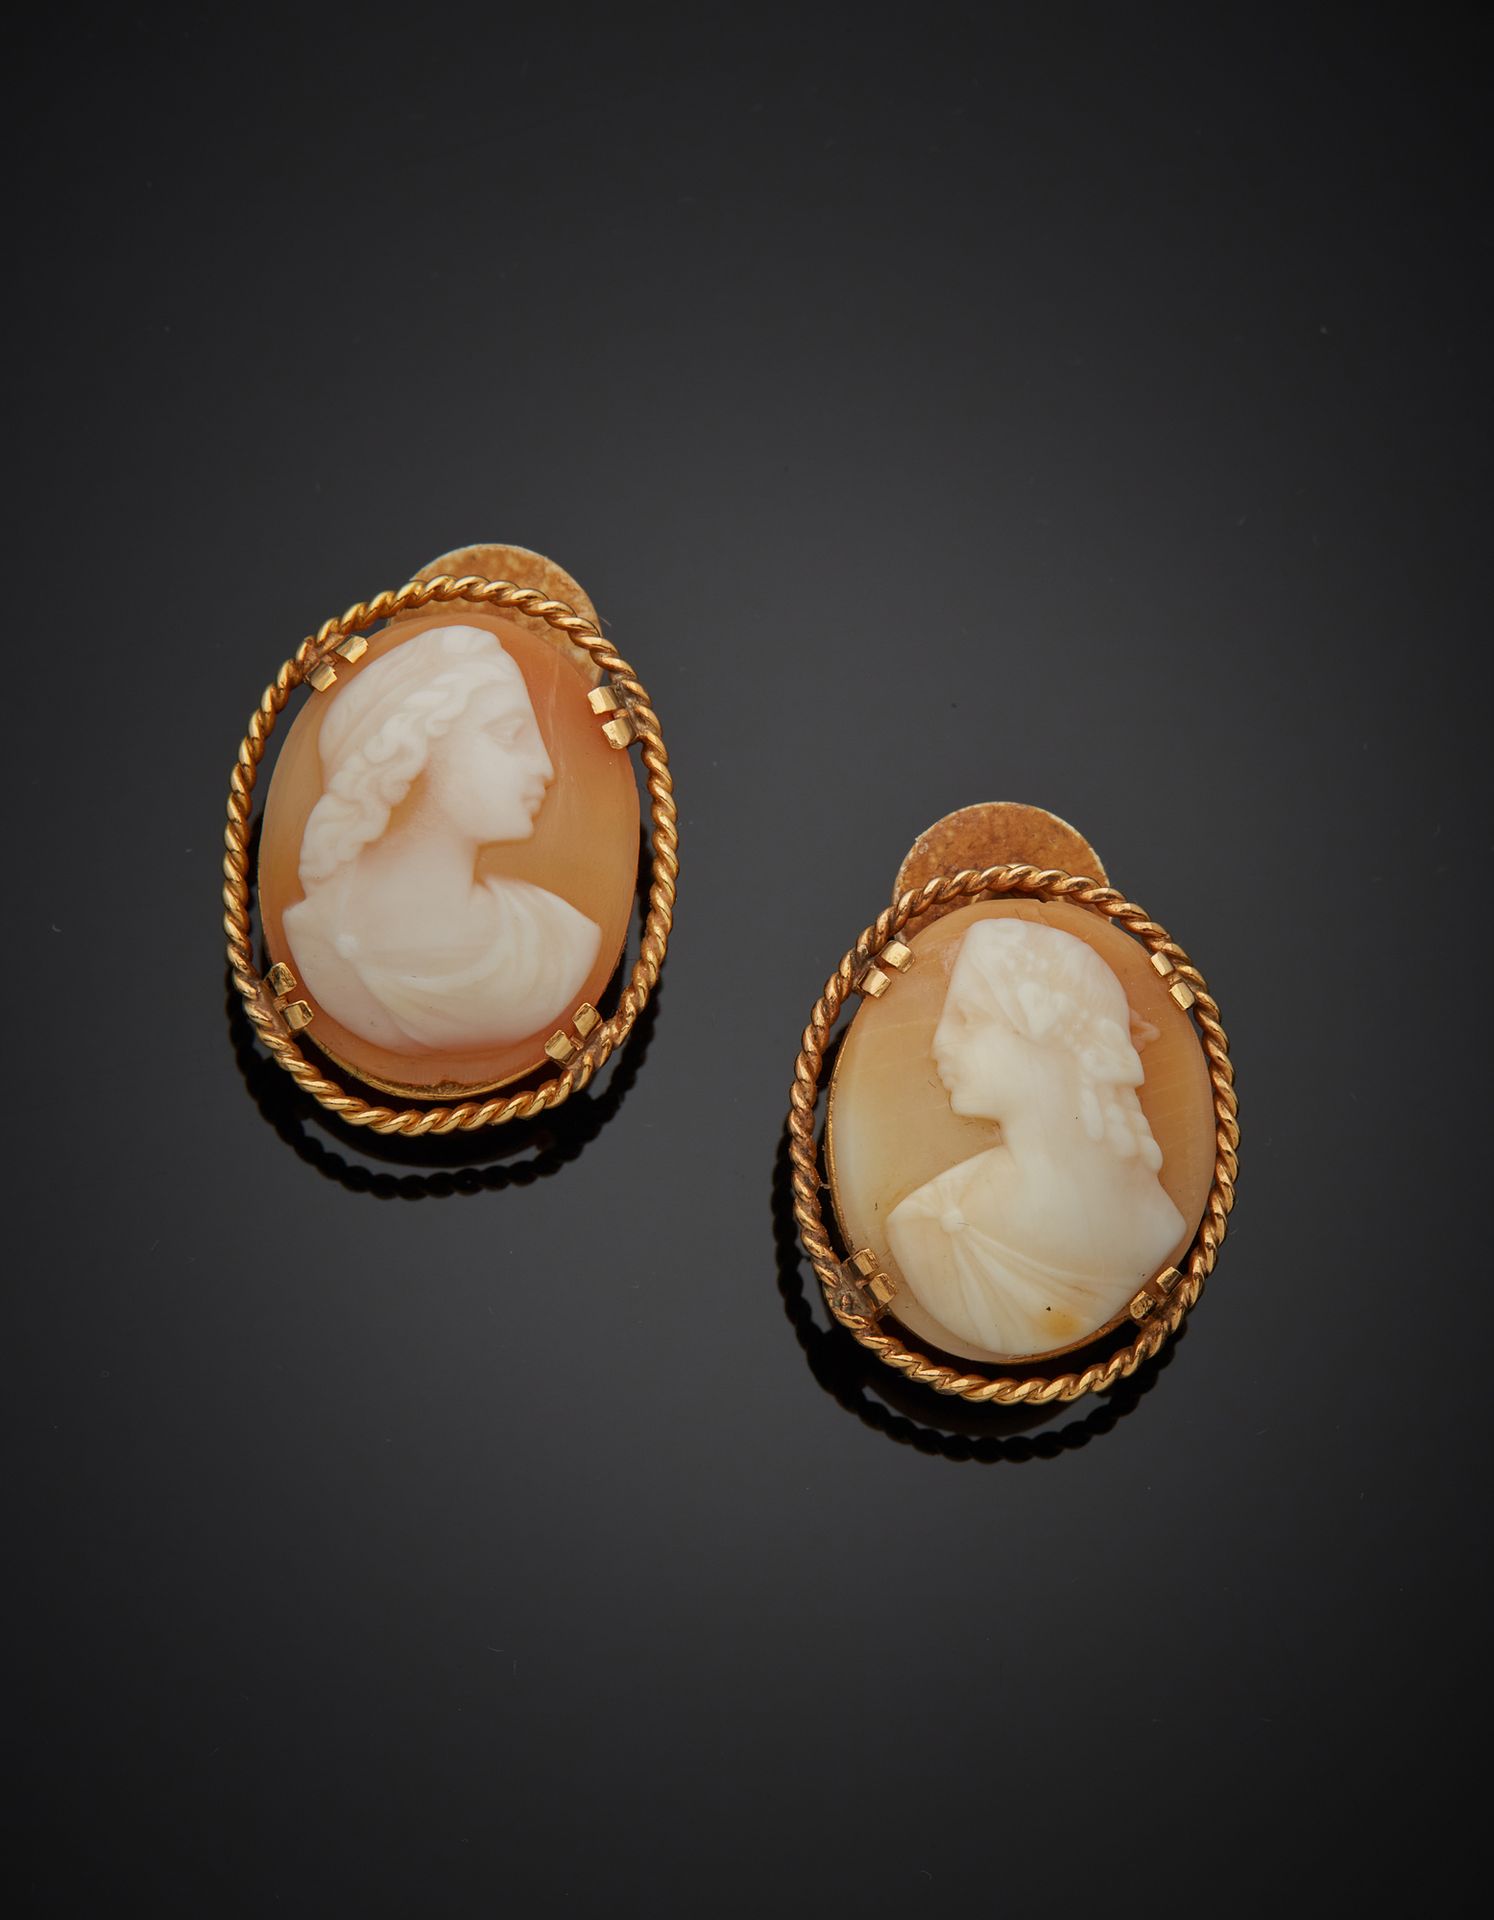 Null 一对18K黄金750‰的耳夹，在贝壳上装饰着椭圆形的浮雕，描绘着古董风格的轮廓。变形。

H.2.30 cm 毛重 10.60 g